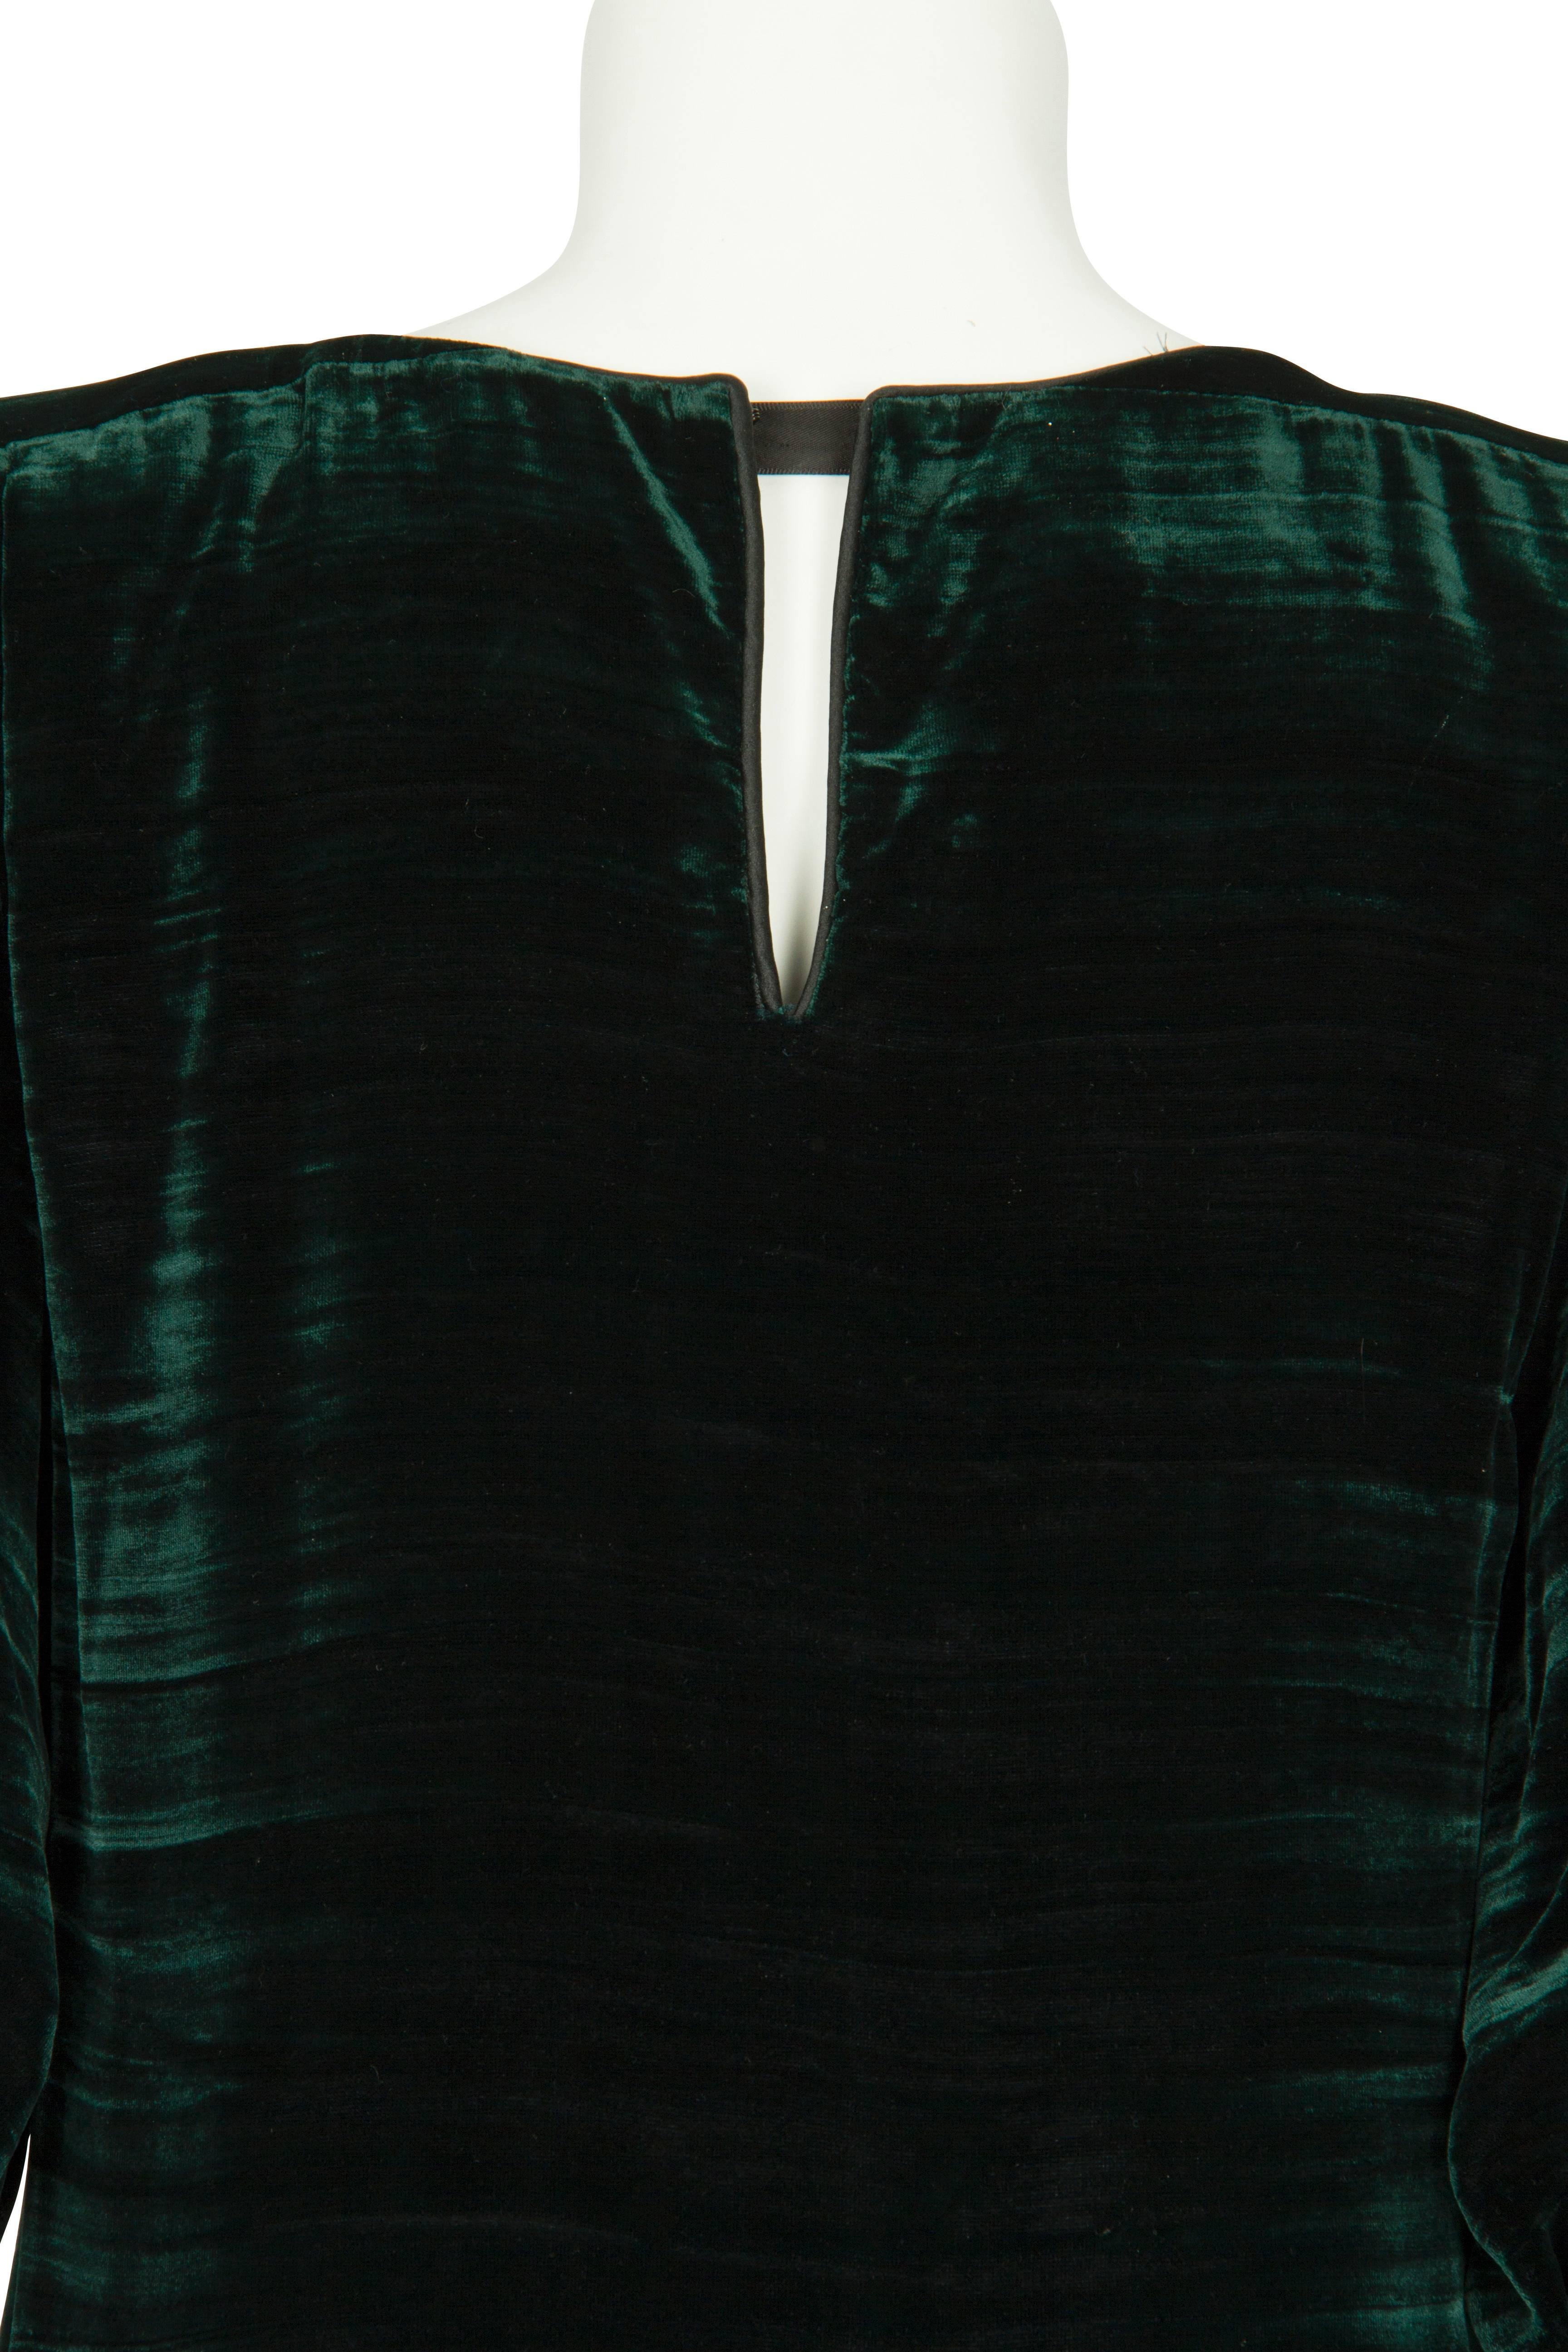 Women's 1980s Anouska Hempel Forest Green Velvet Dropped-Waist Dress with Puffed Sleeves For Sale